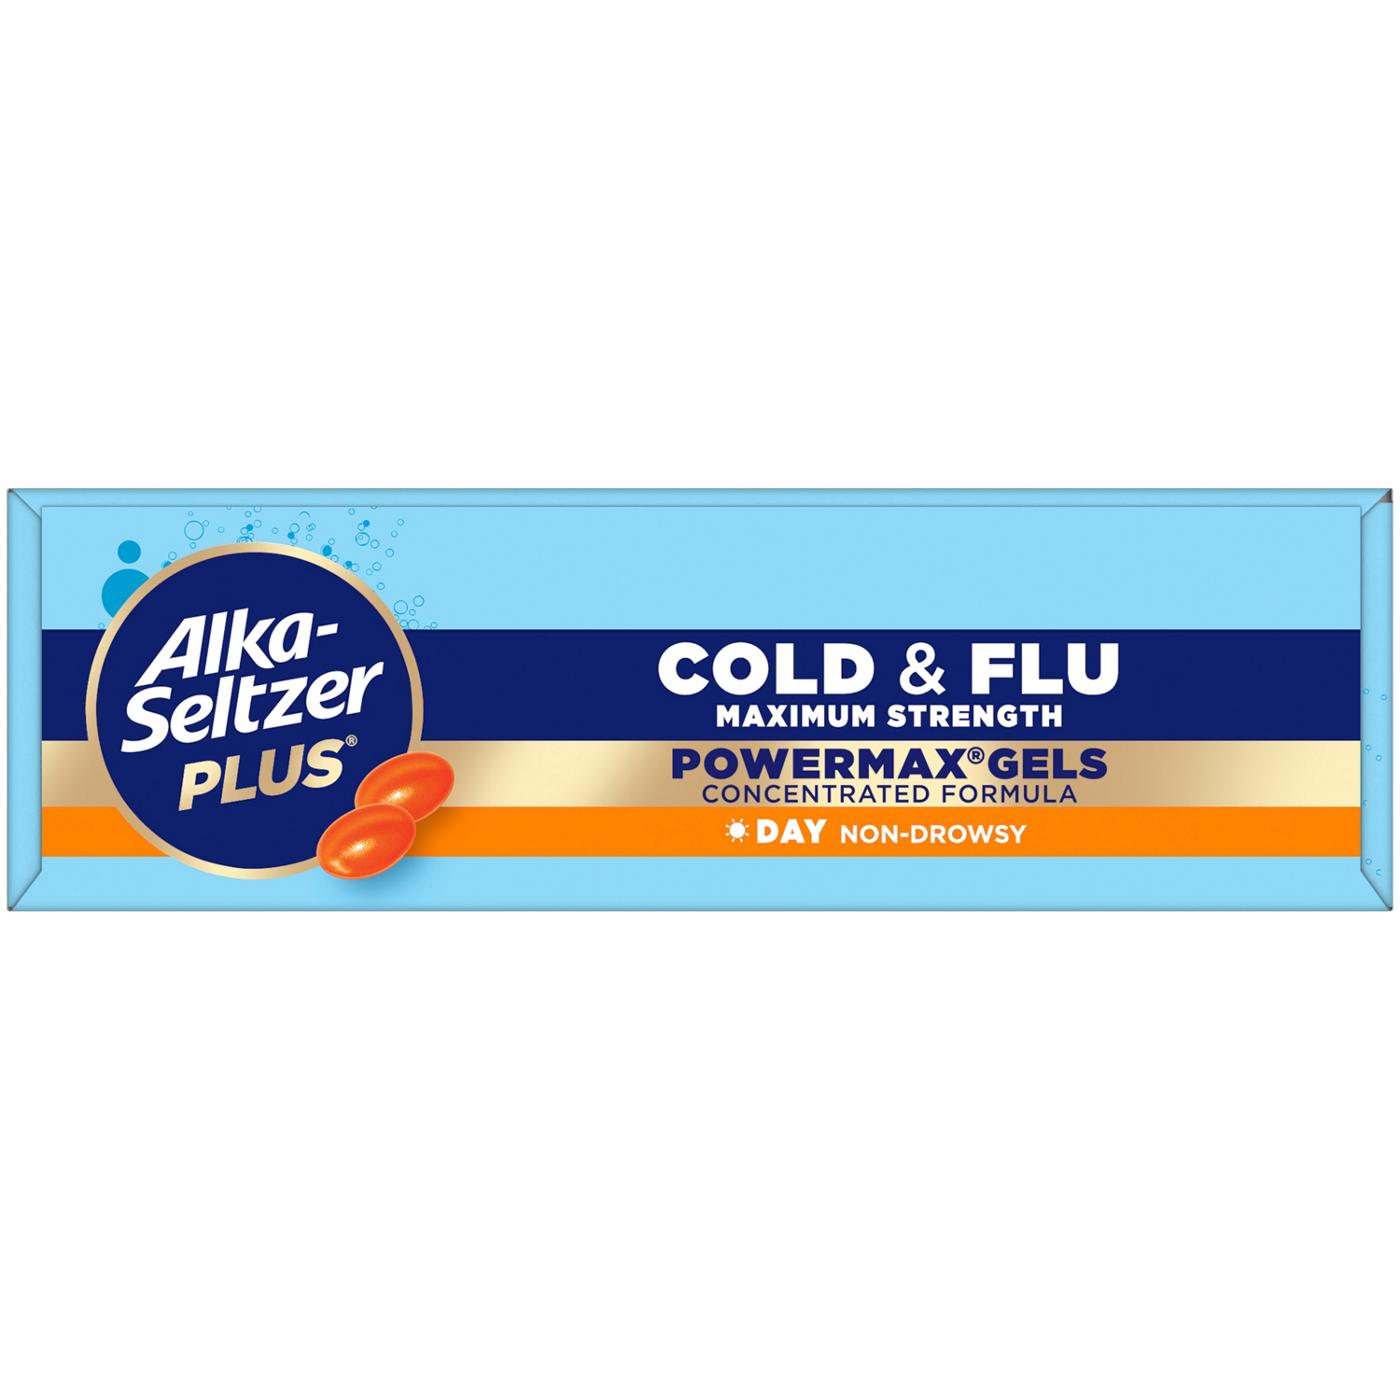 Alka-Seltzer Plus Maximum Strength Cold & Flu PowerMax Gels; image 5 of 7